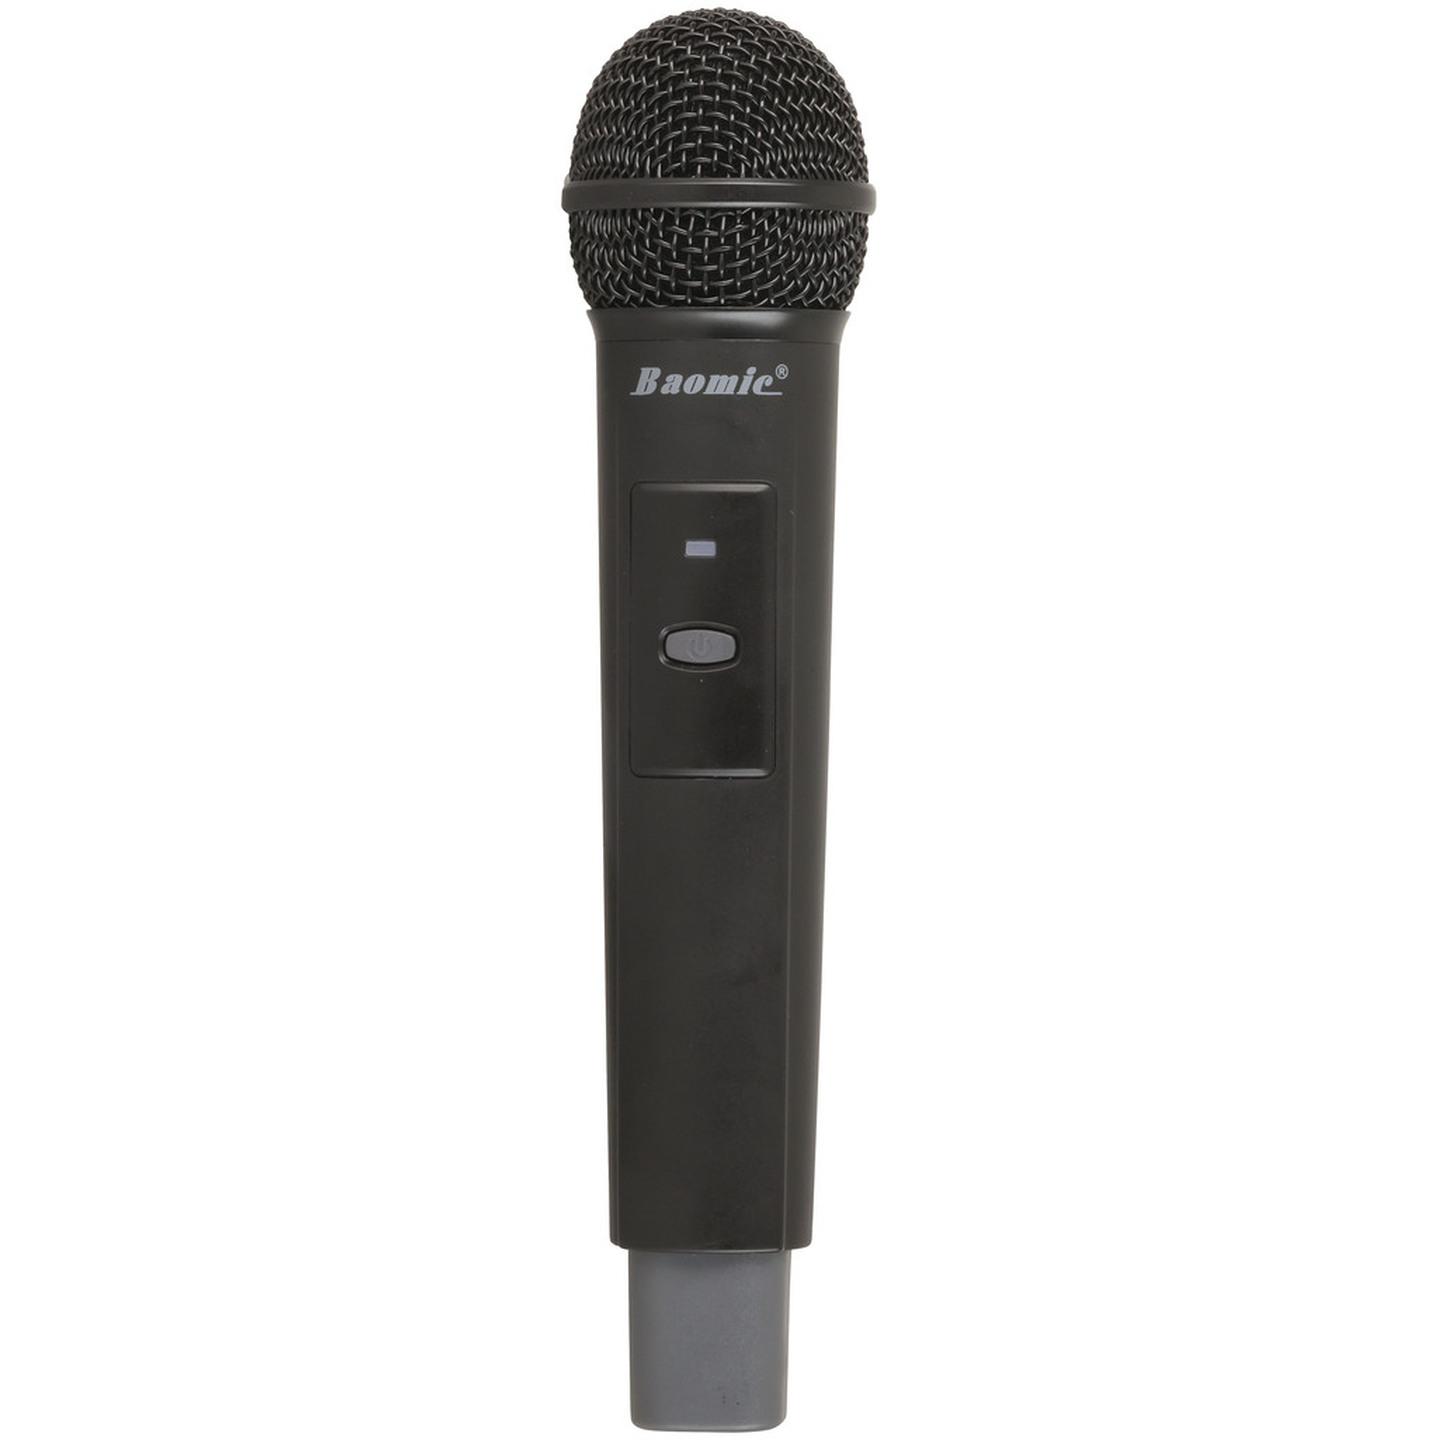 2 Channel 2.4GHz Digital Wireless Microphone